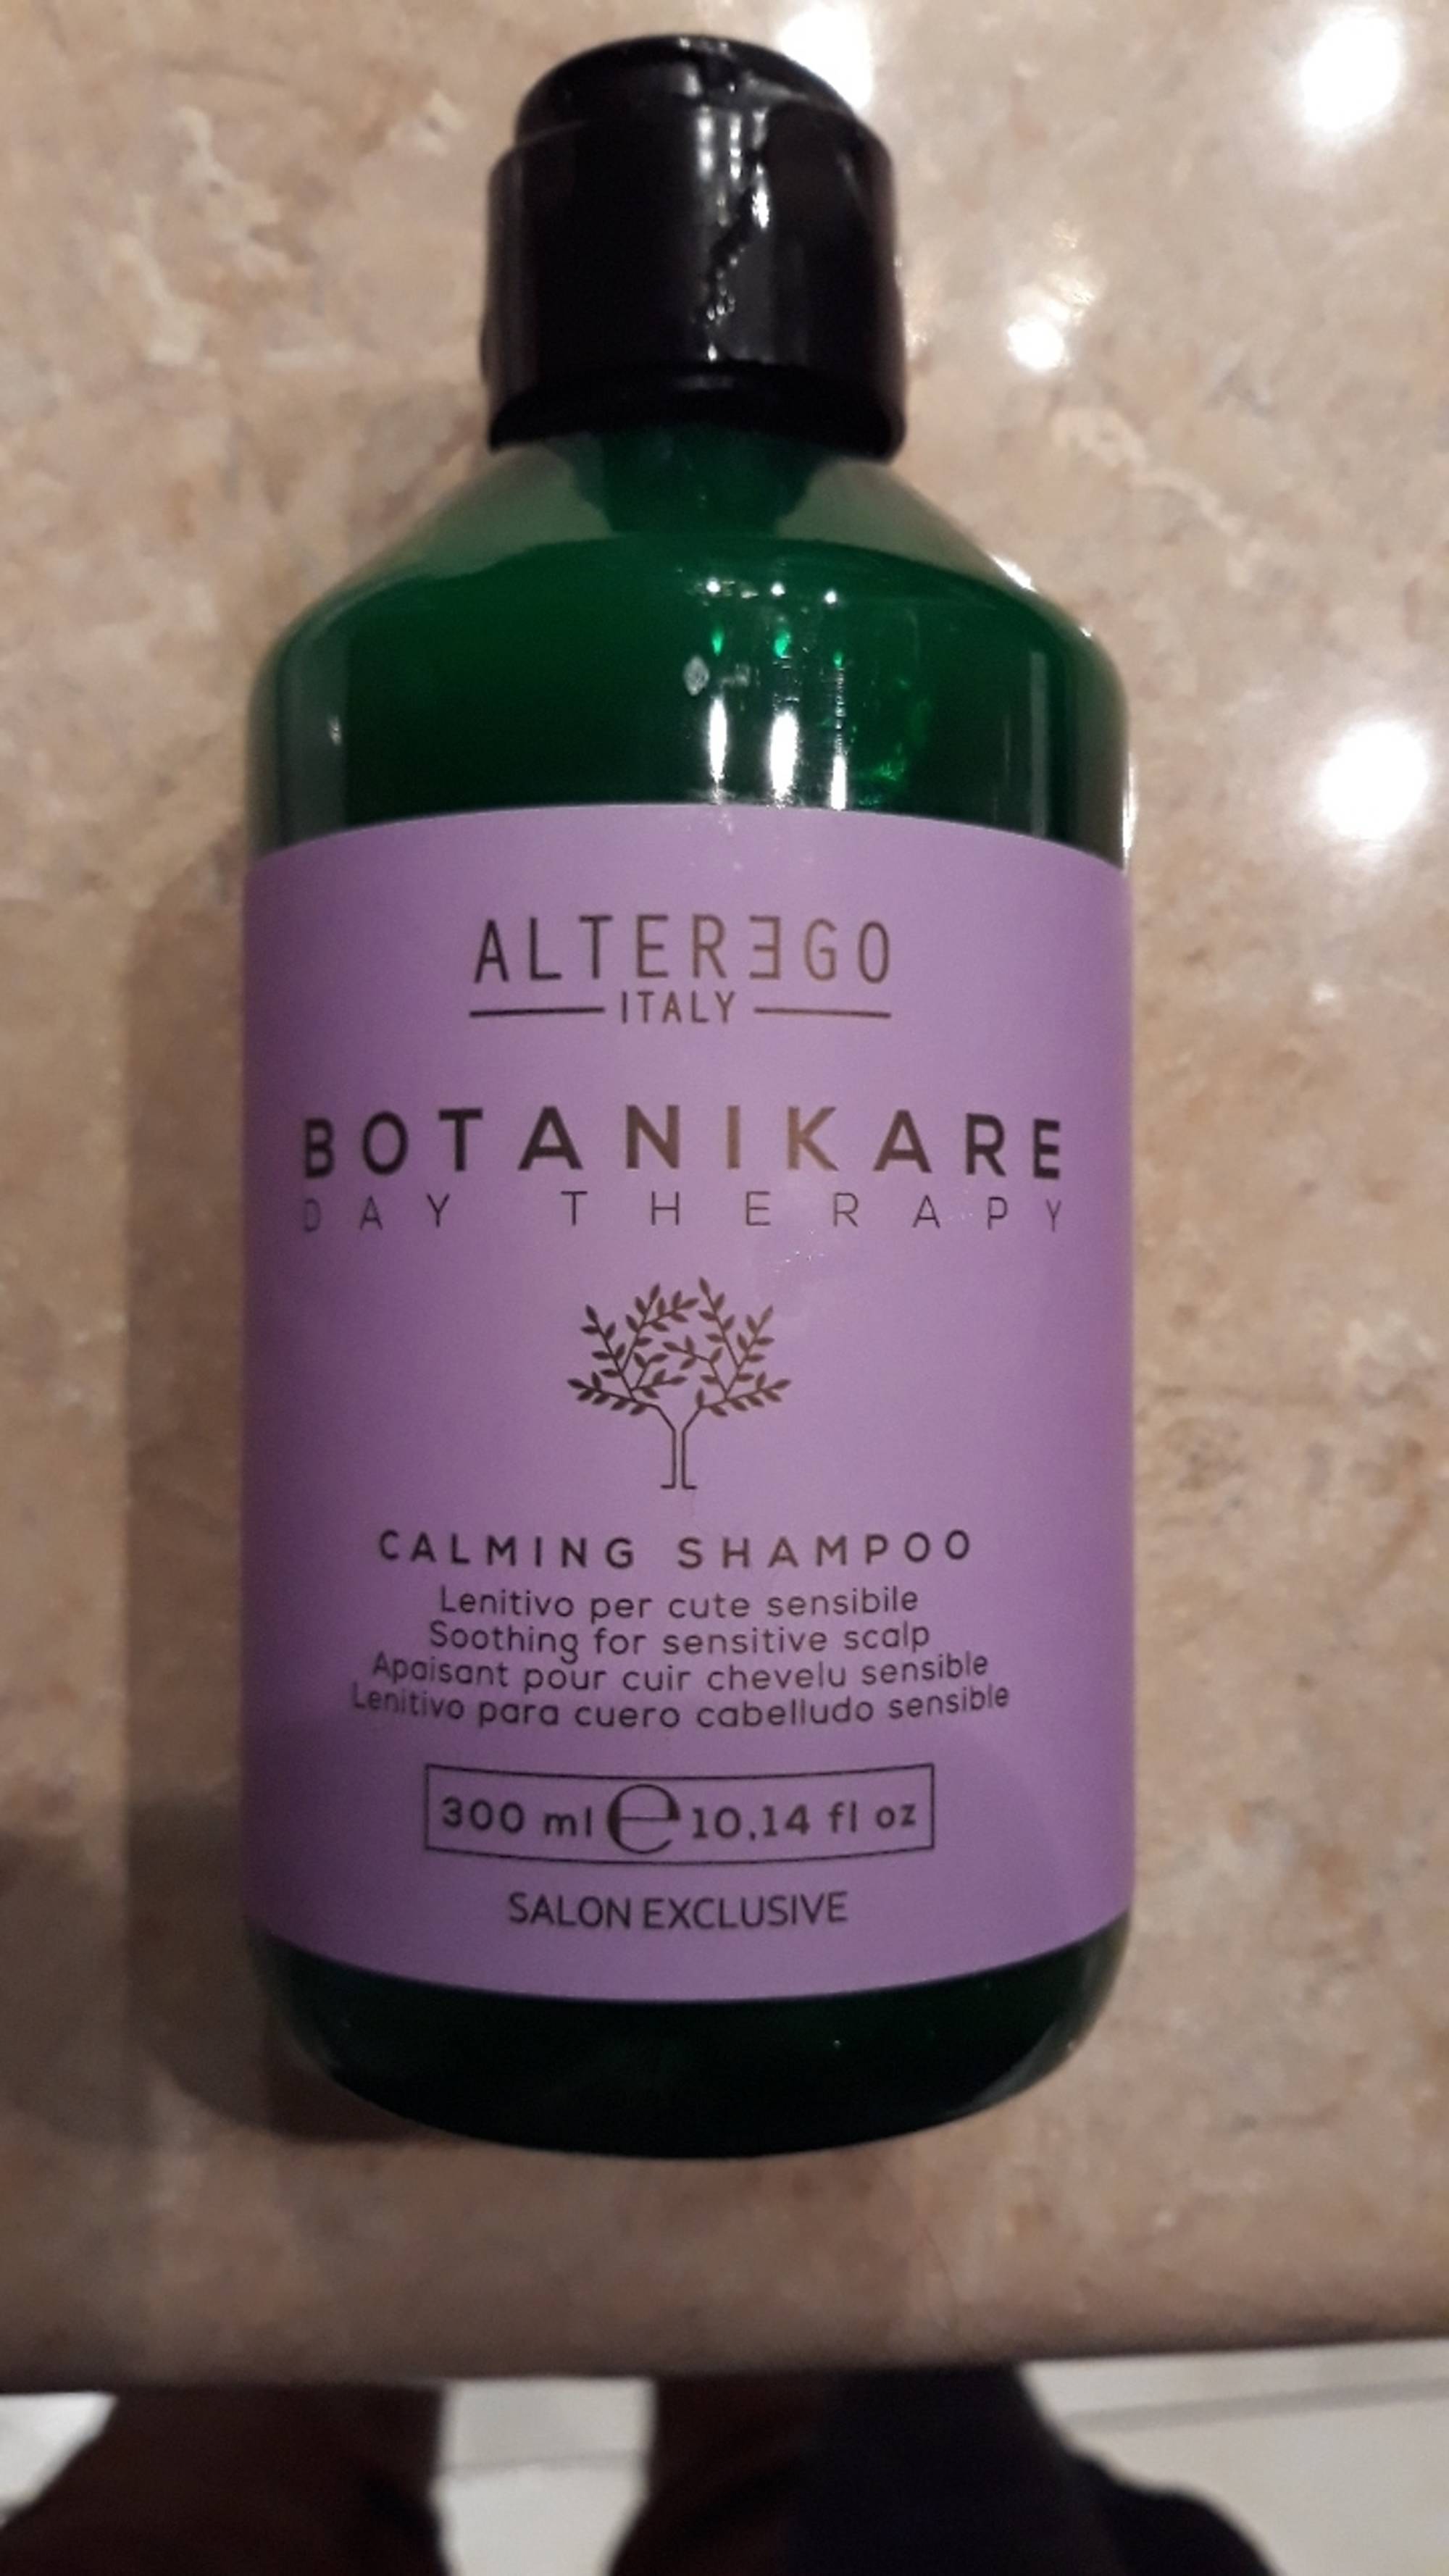 ALTER EGO - Botanikare day therapy - Calming shampoo